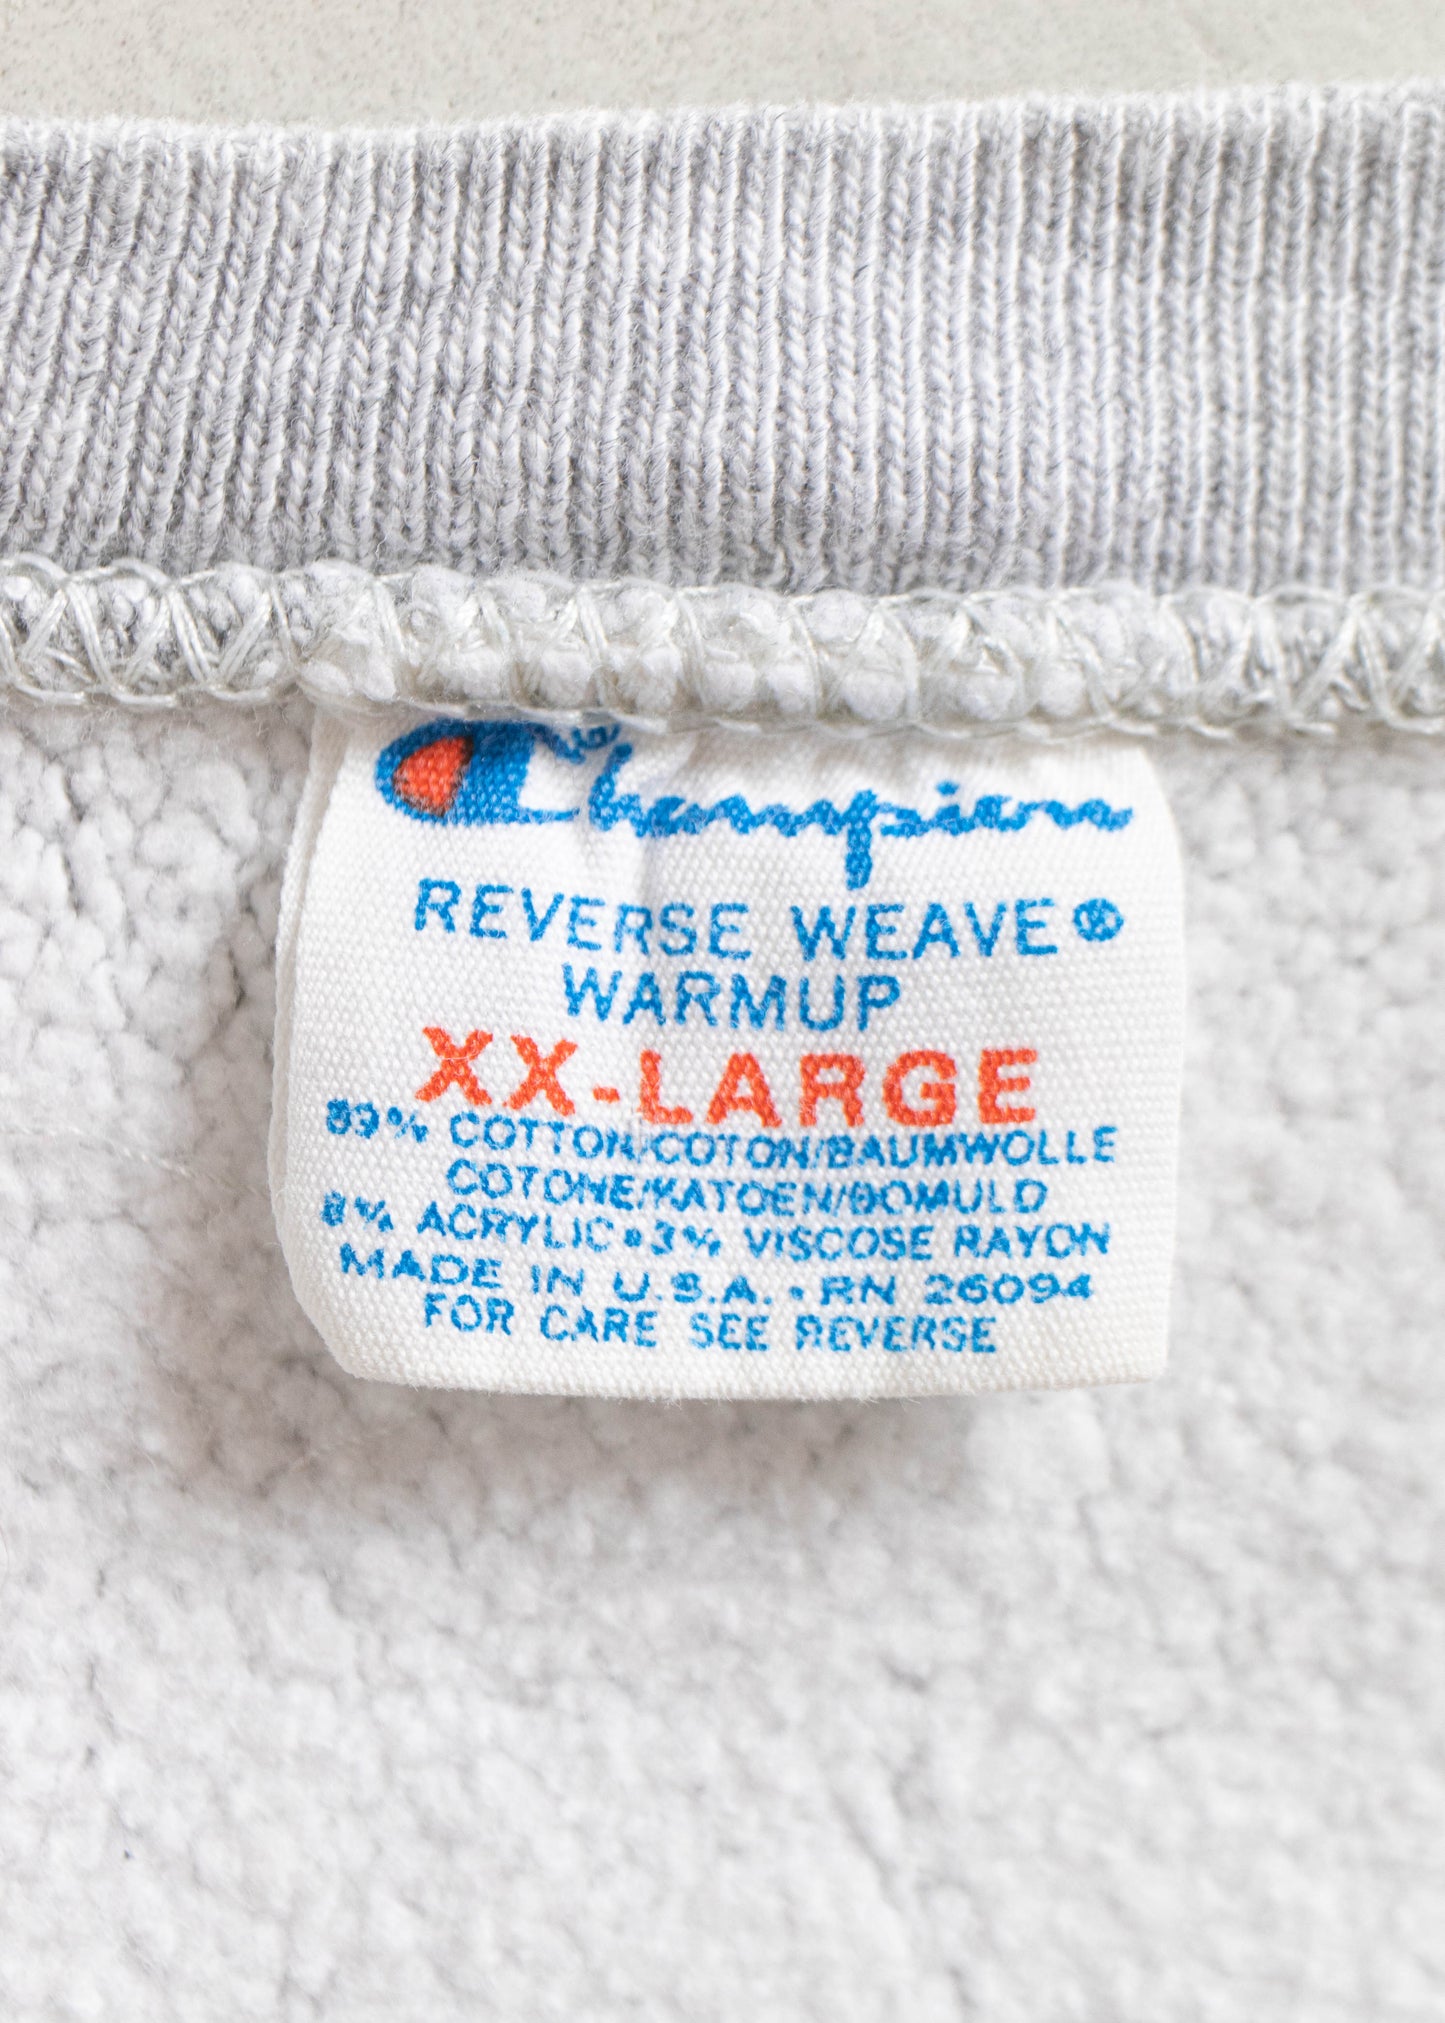 Vintage 1980s Champion Reverse Weave Warmup JJS Sweatshirt Size L/XL